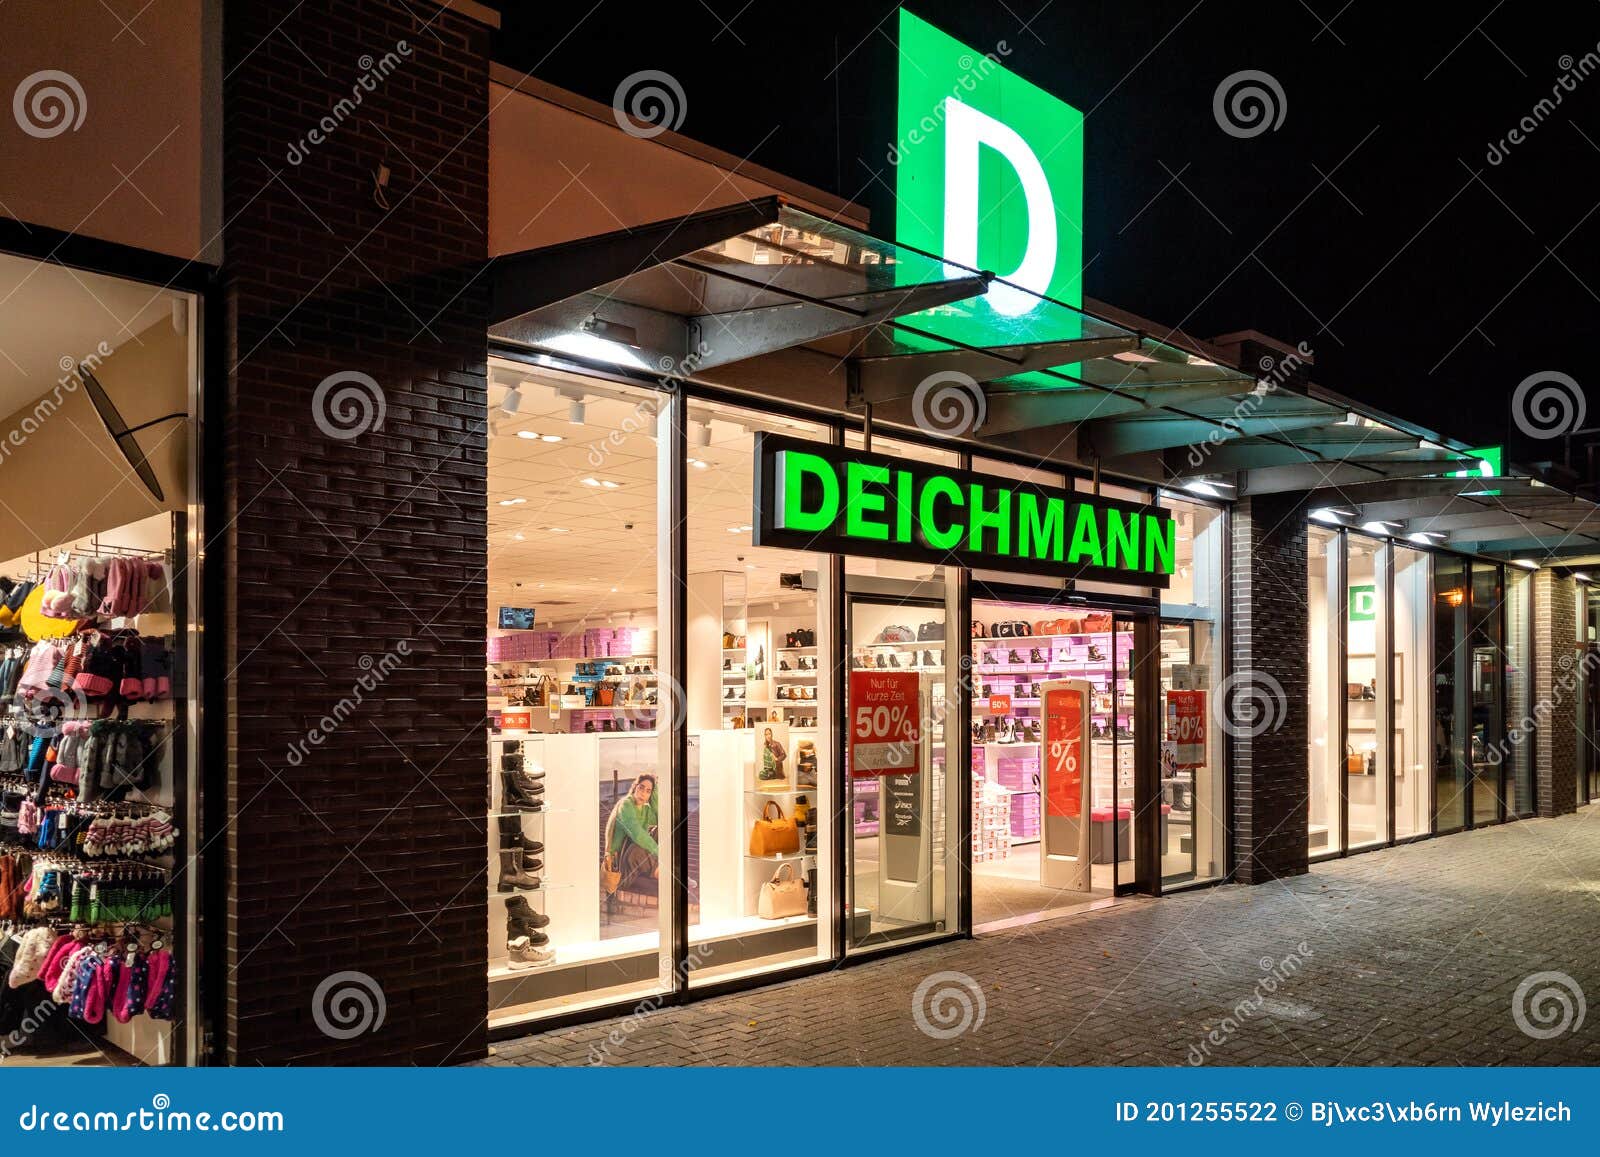 107 Deichmann Photos - Free & Royalty-Free Dreamstime